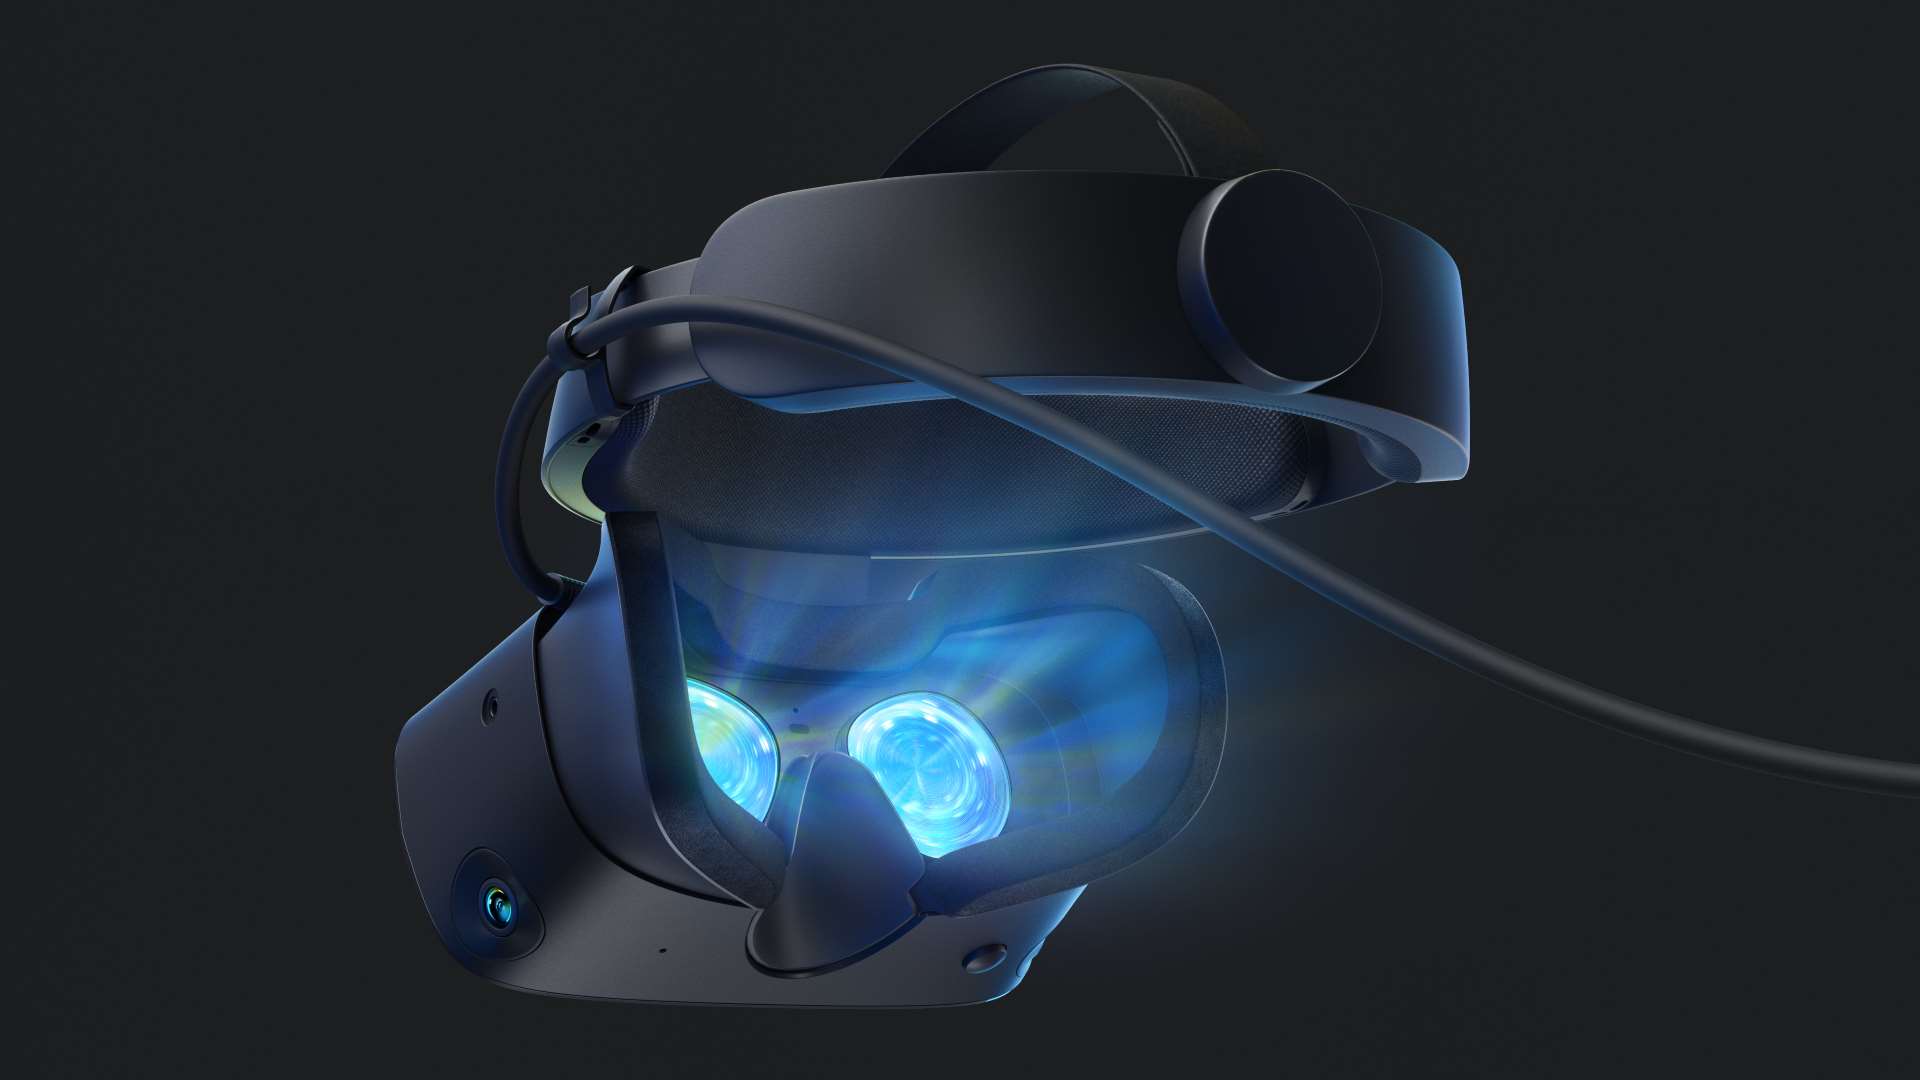 Introducing Oculus Rift S 